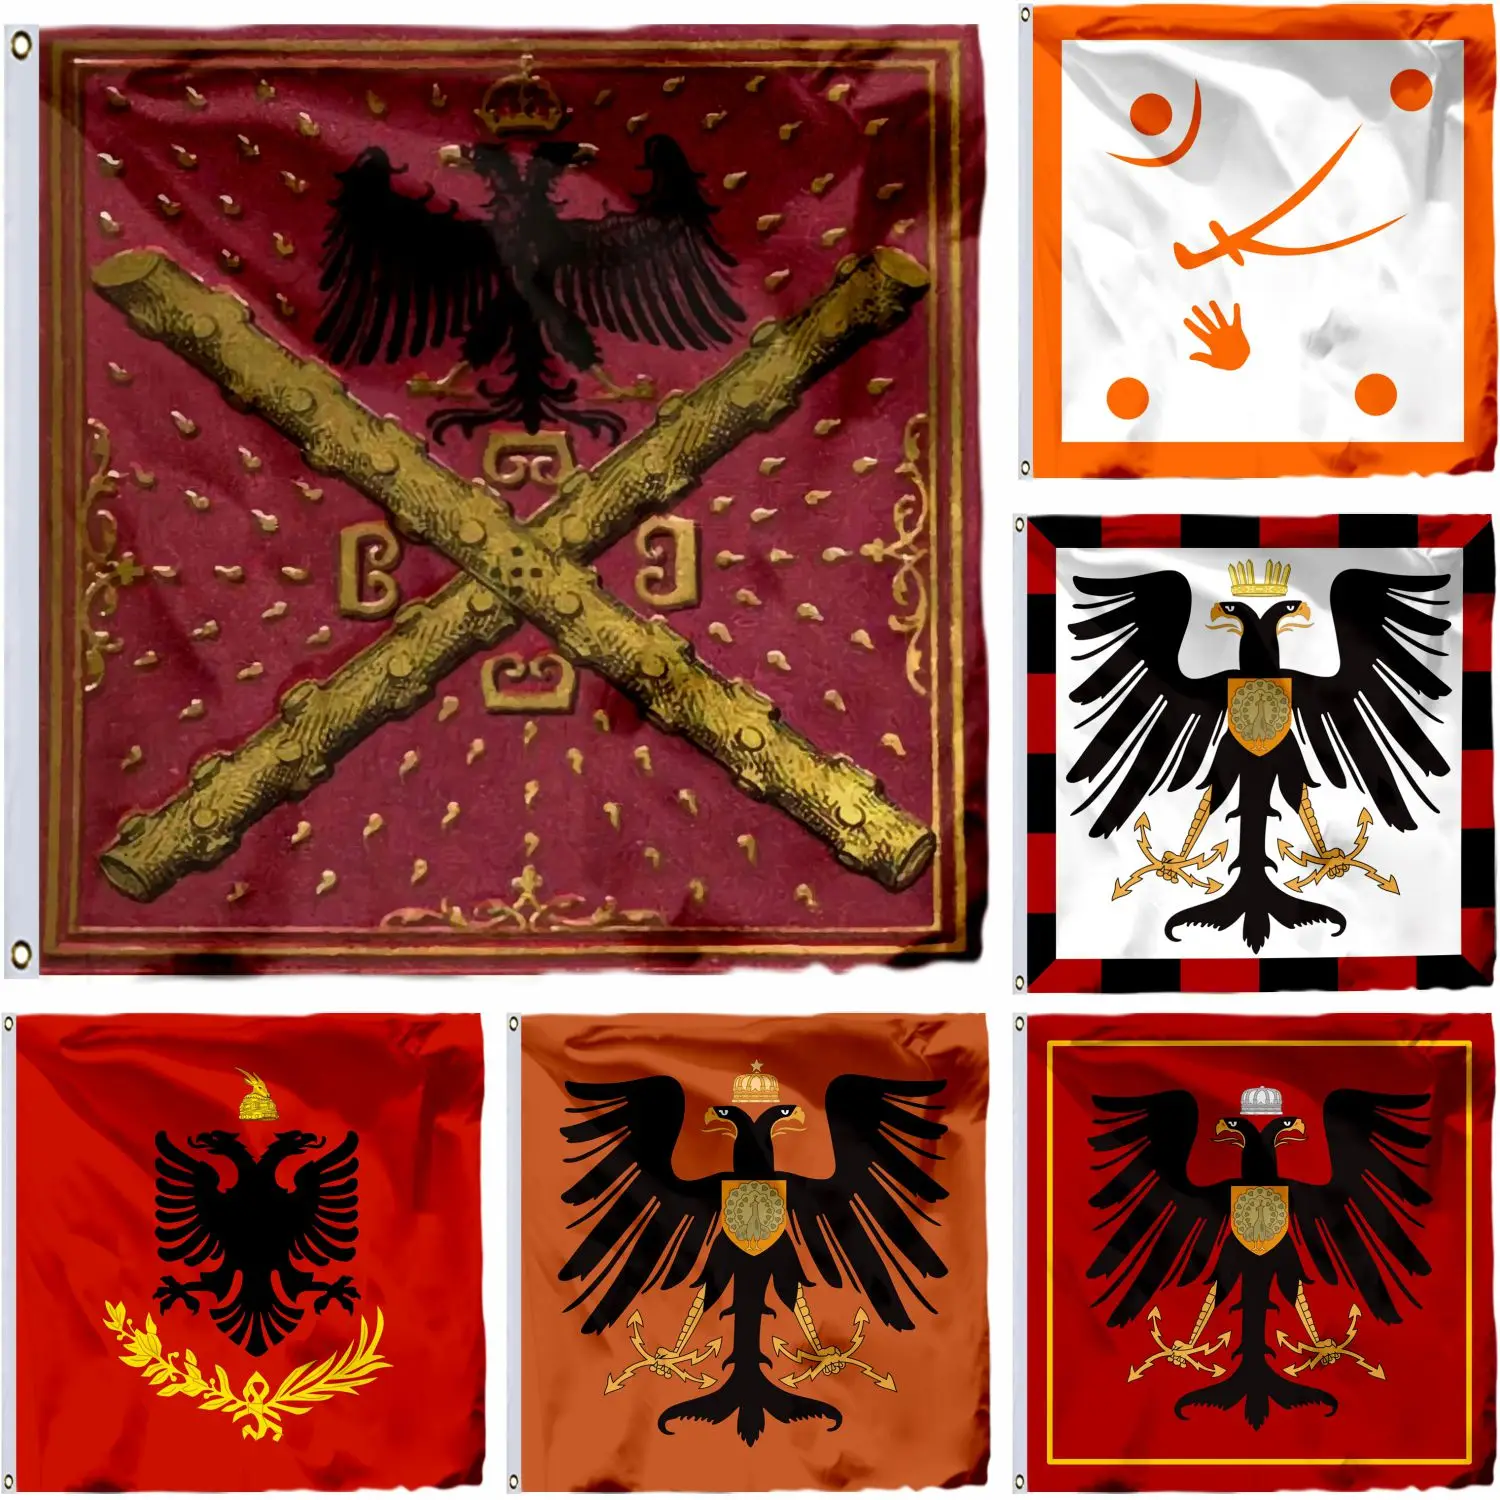 Albania Variation-Bandera del Ejército Real de Albania, Mercurio Bua, 4x4 pies, casa de princesa, Wied 120x120cm, Mahmut, Pasha, Bushatli, Banner 1769